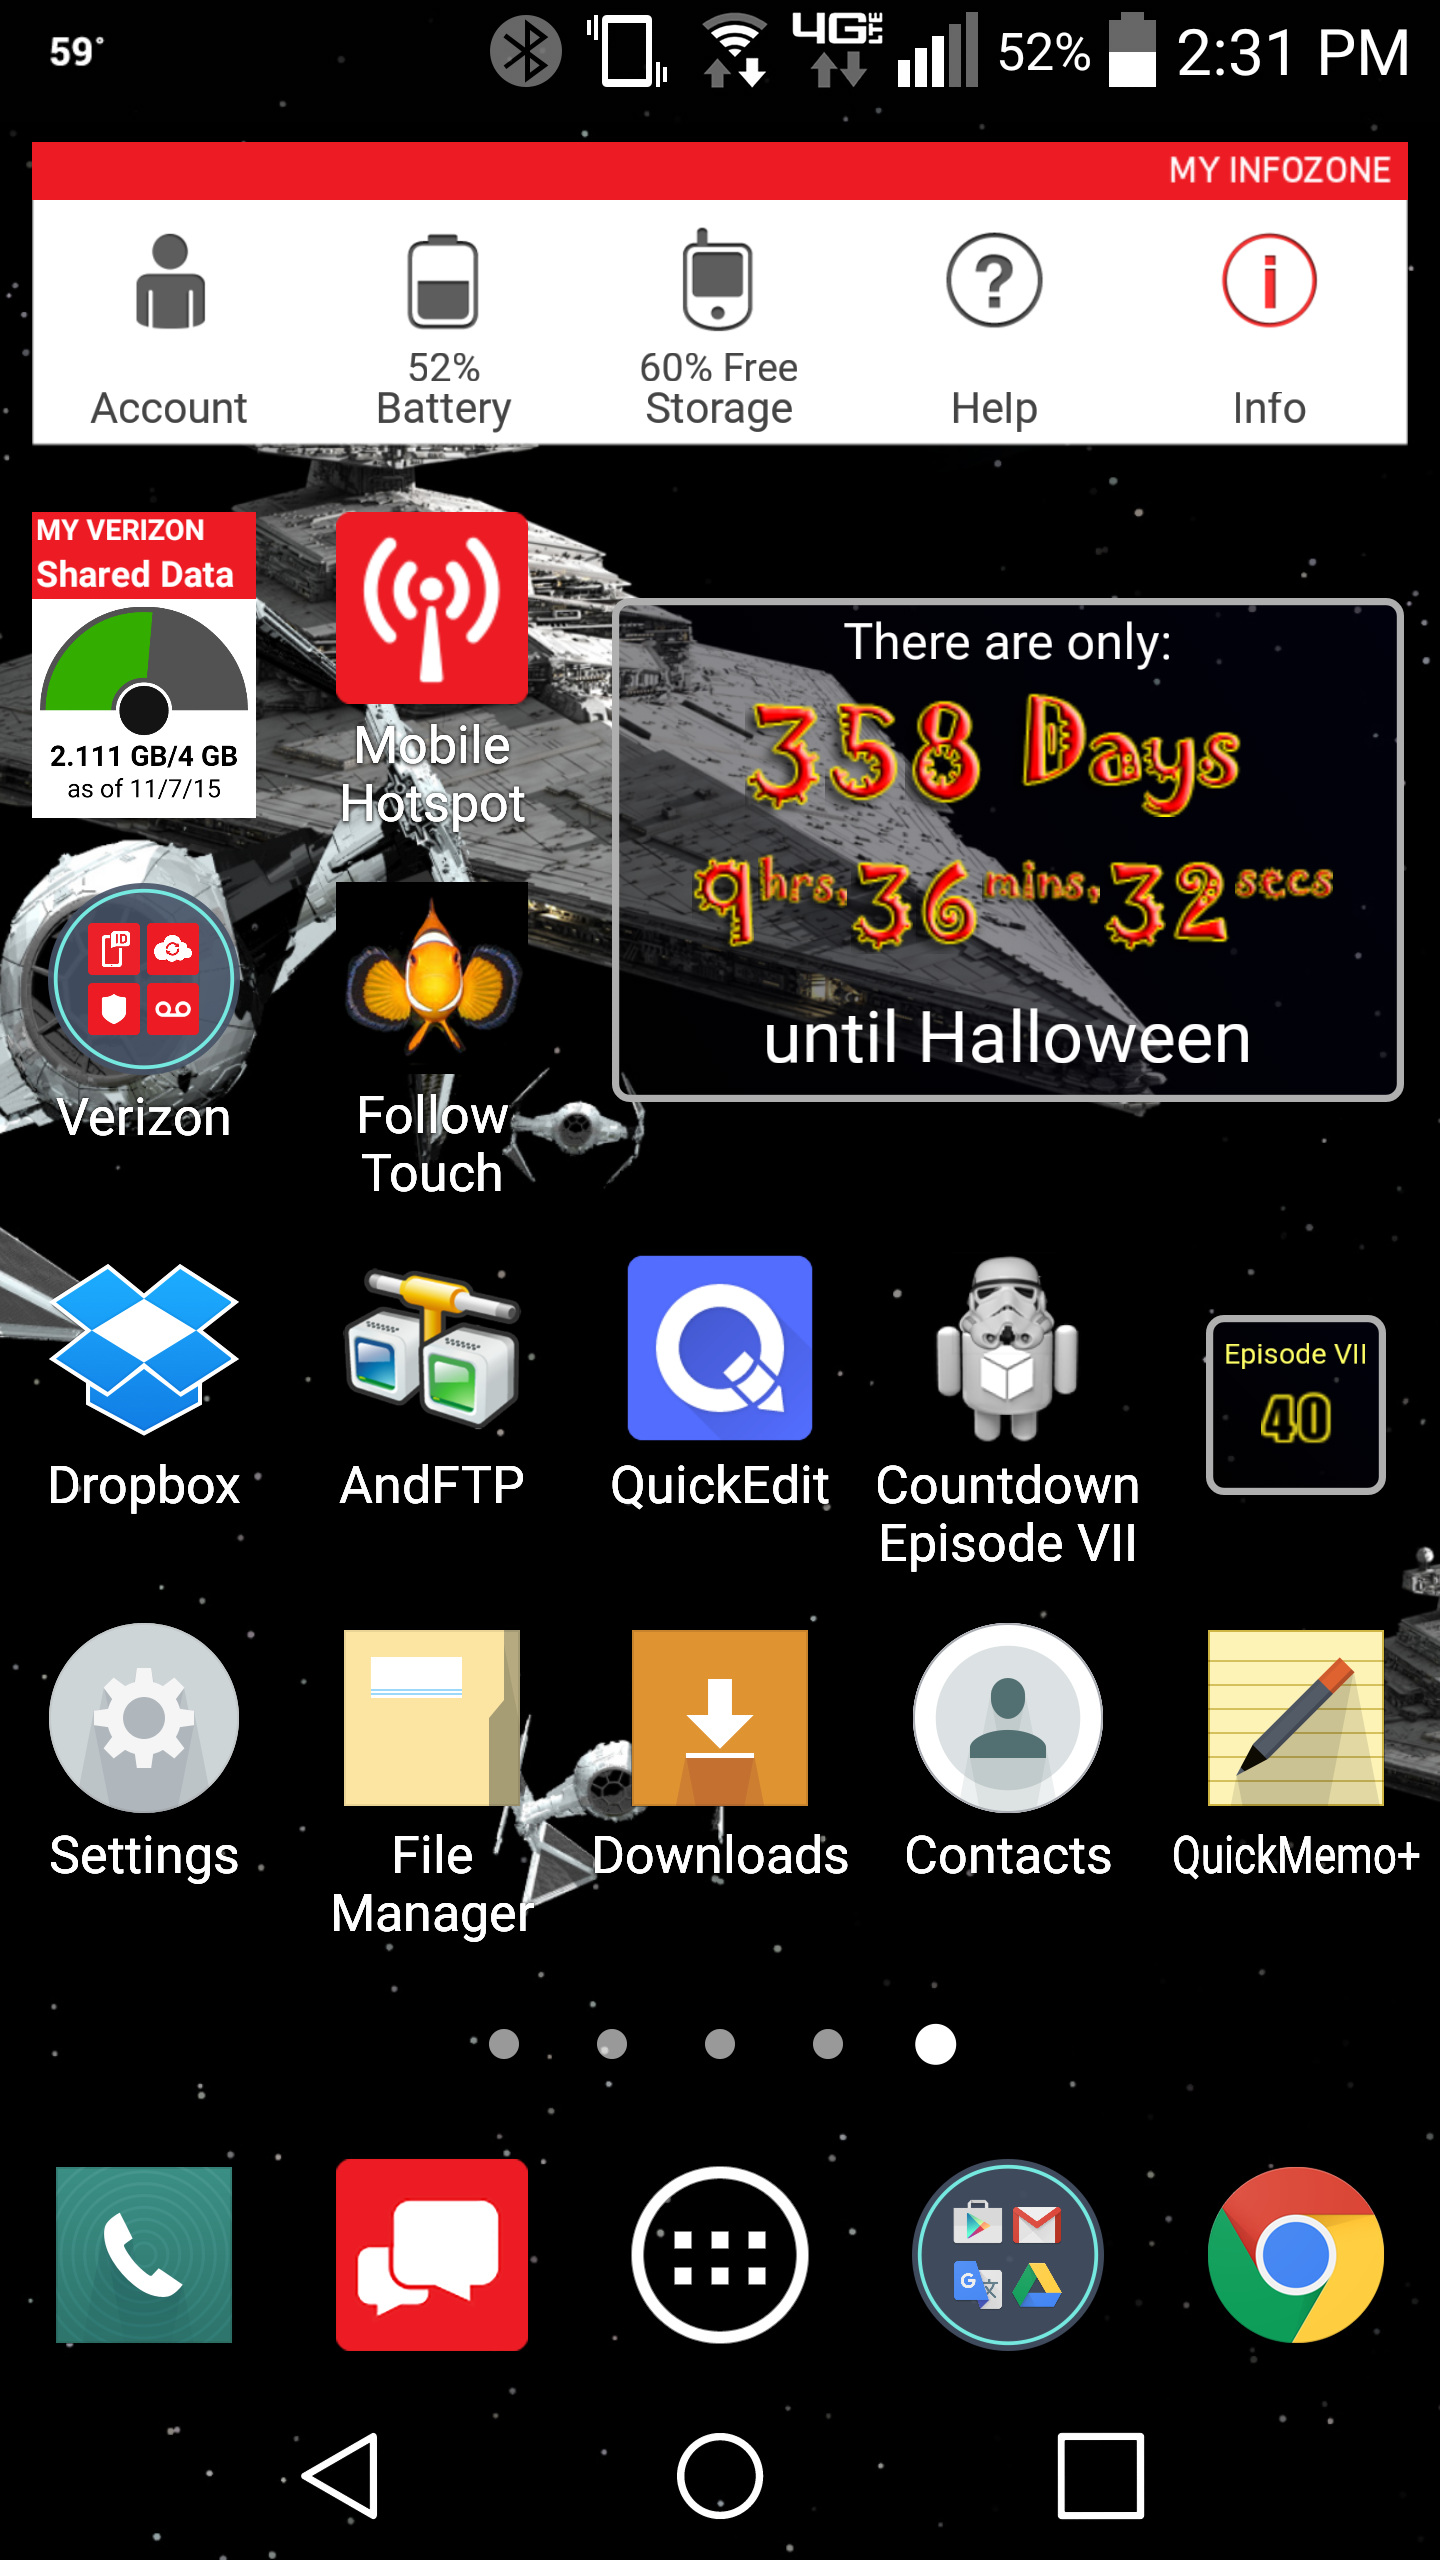 Countdown to Halloween